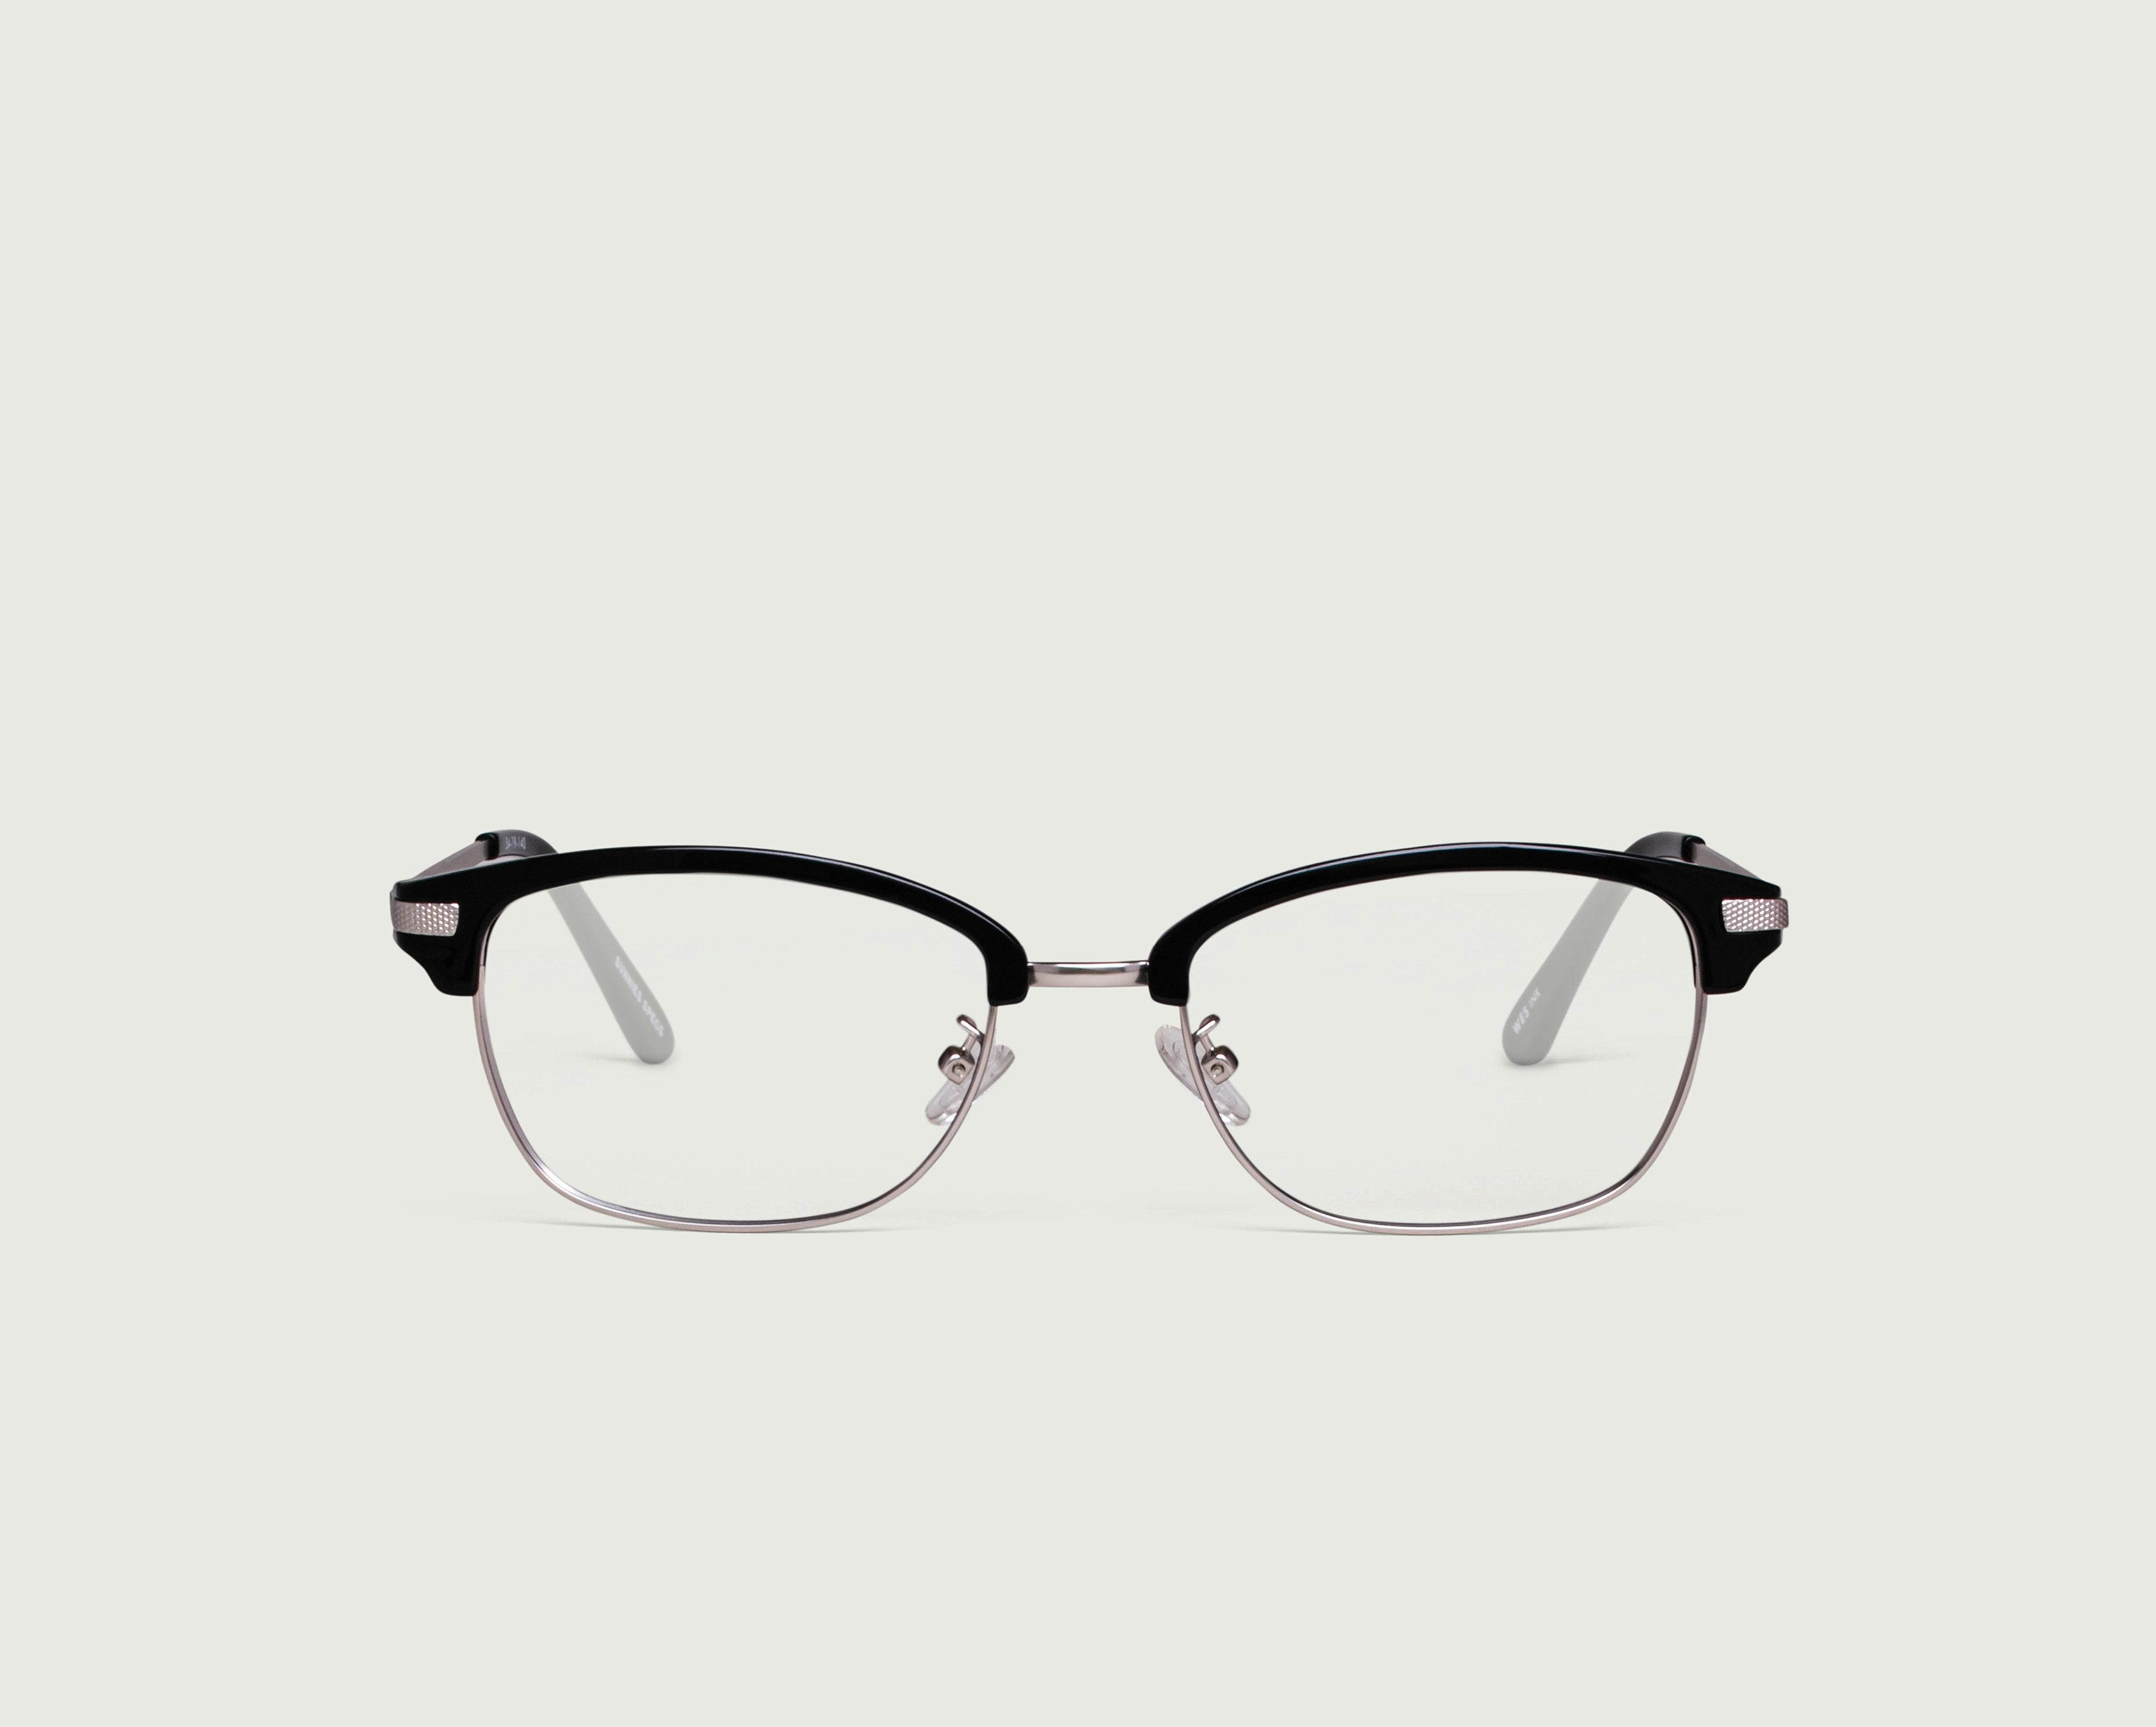 Ink::Wes Eyeglasses browline black plastic front